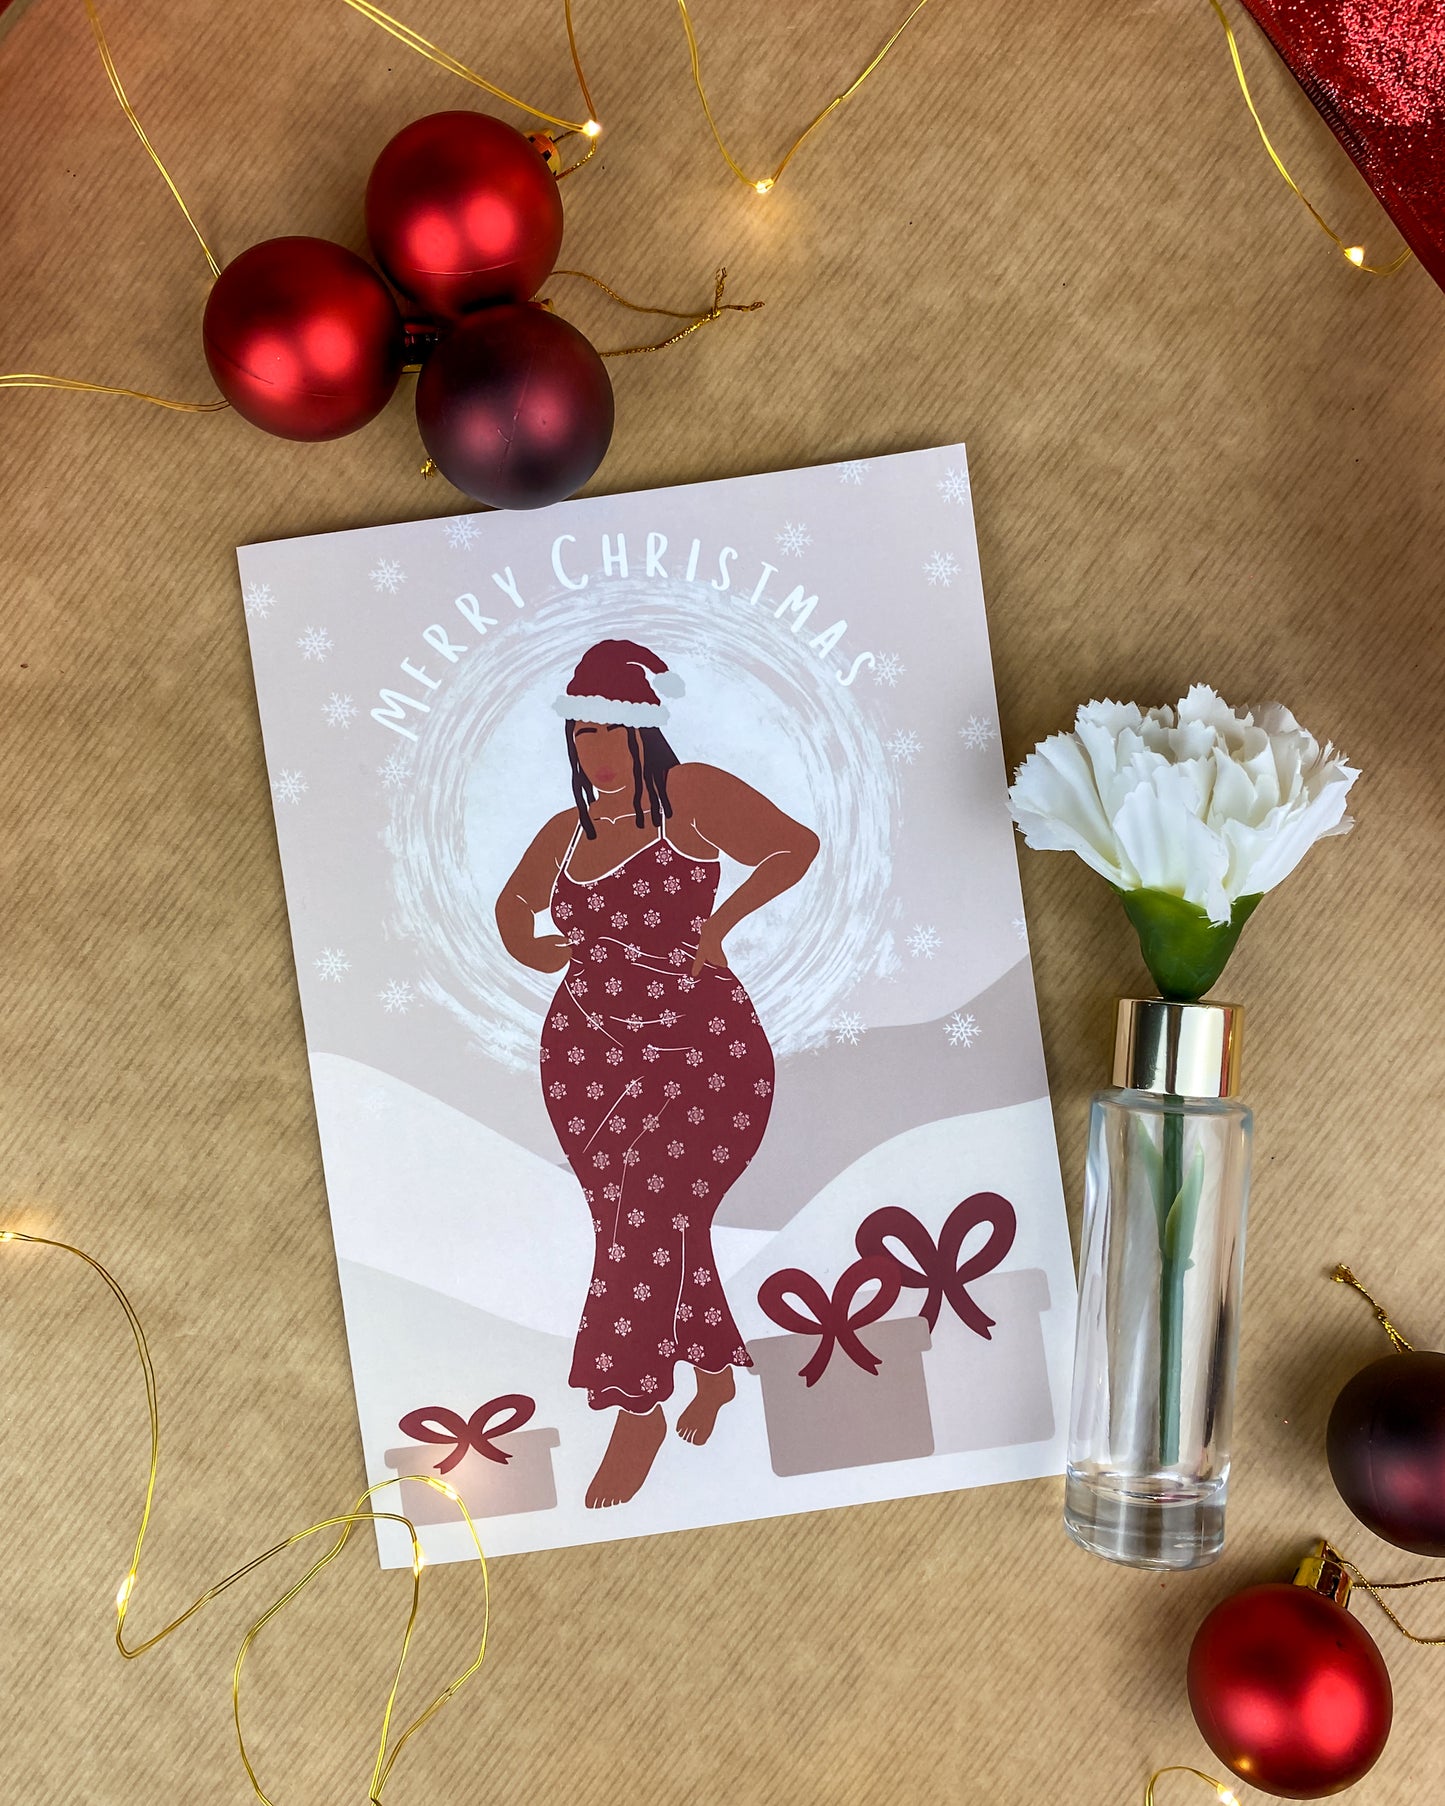 Mrs Claus Black Woman Christmas Card, Seasons Greetings - Black Christmas Card